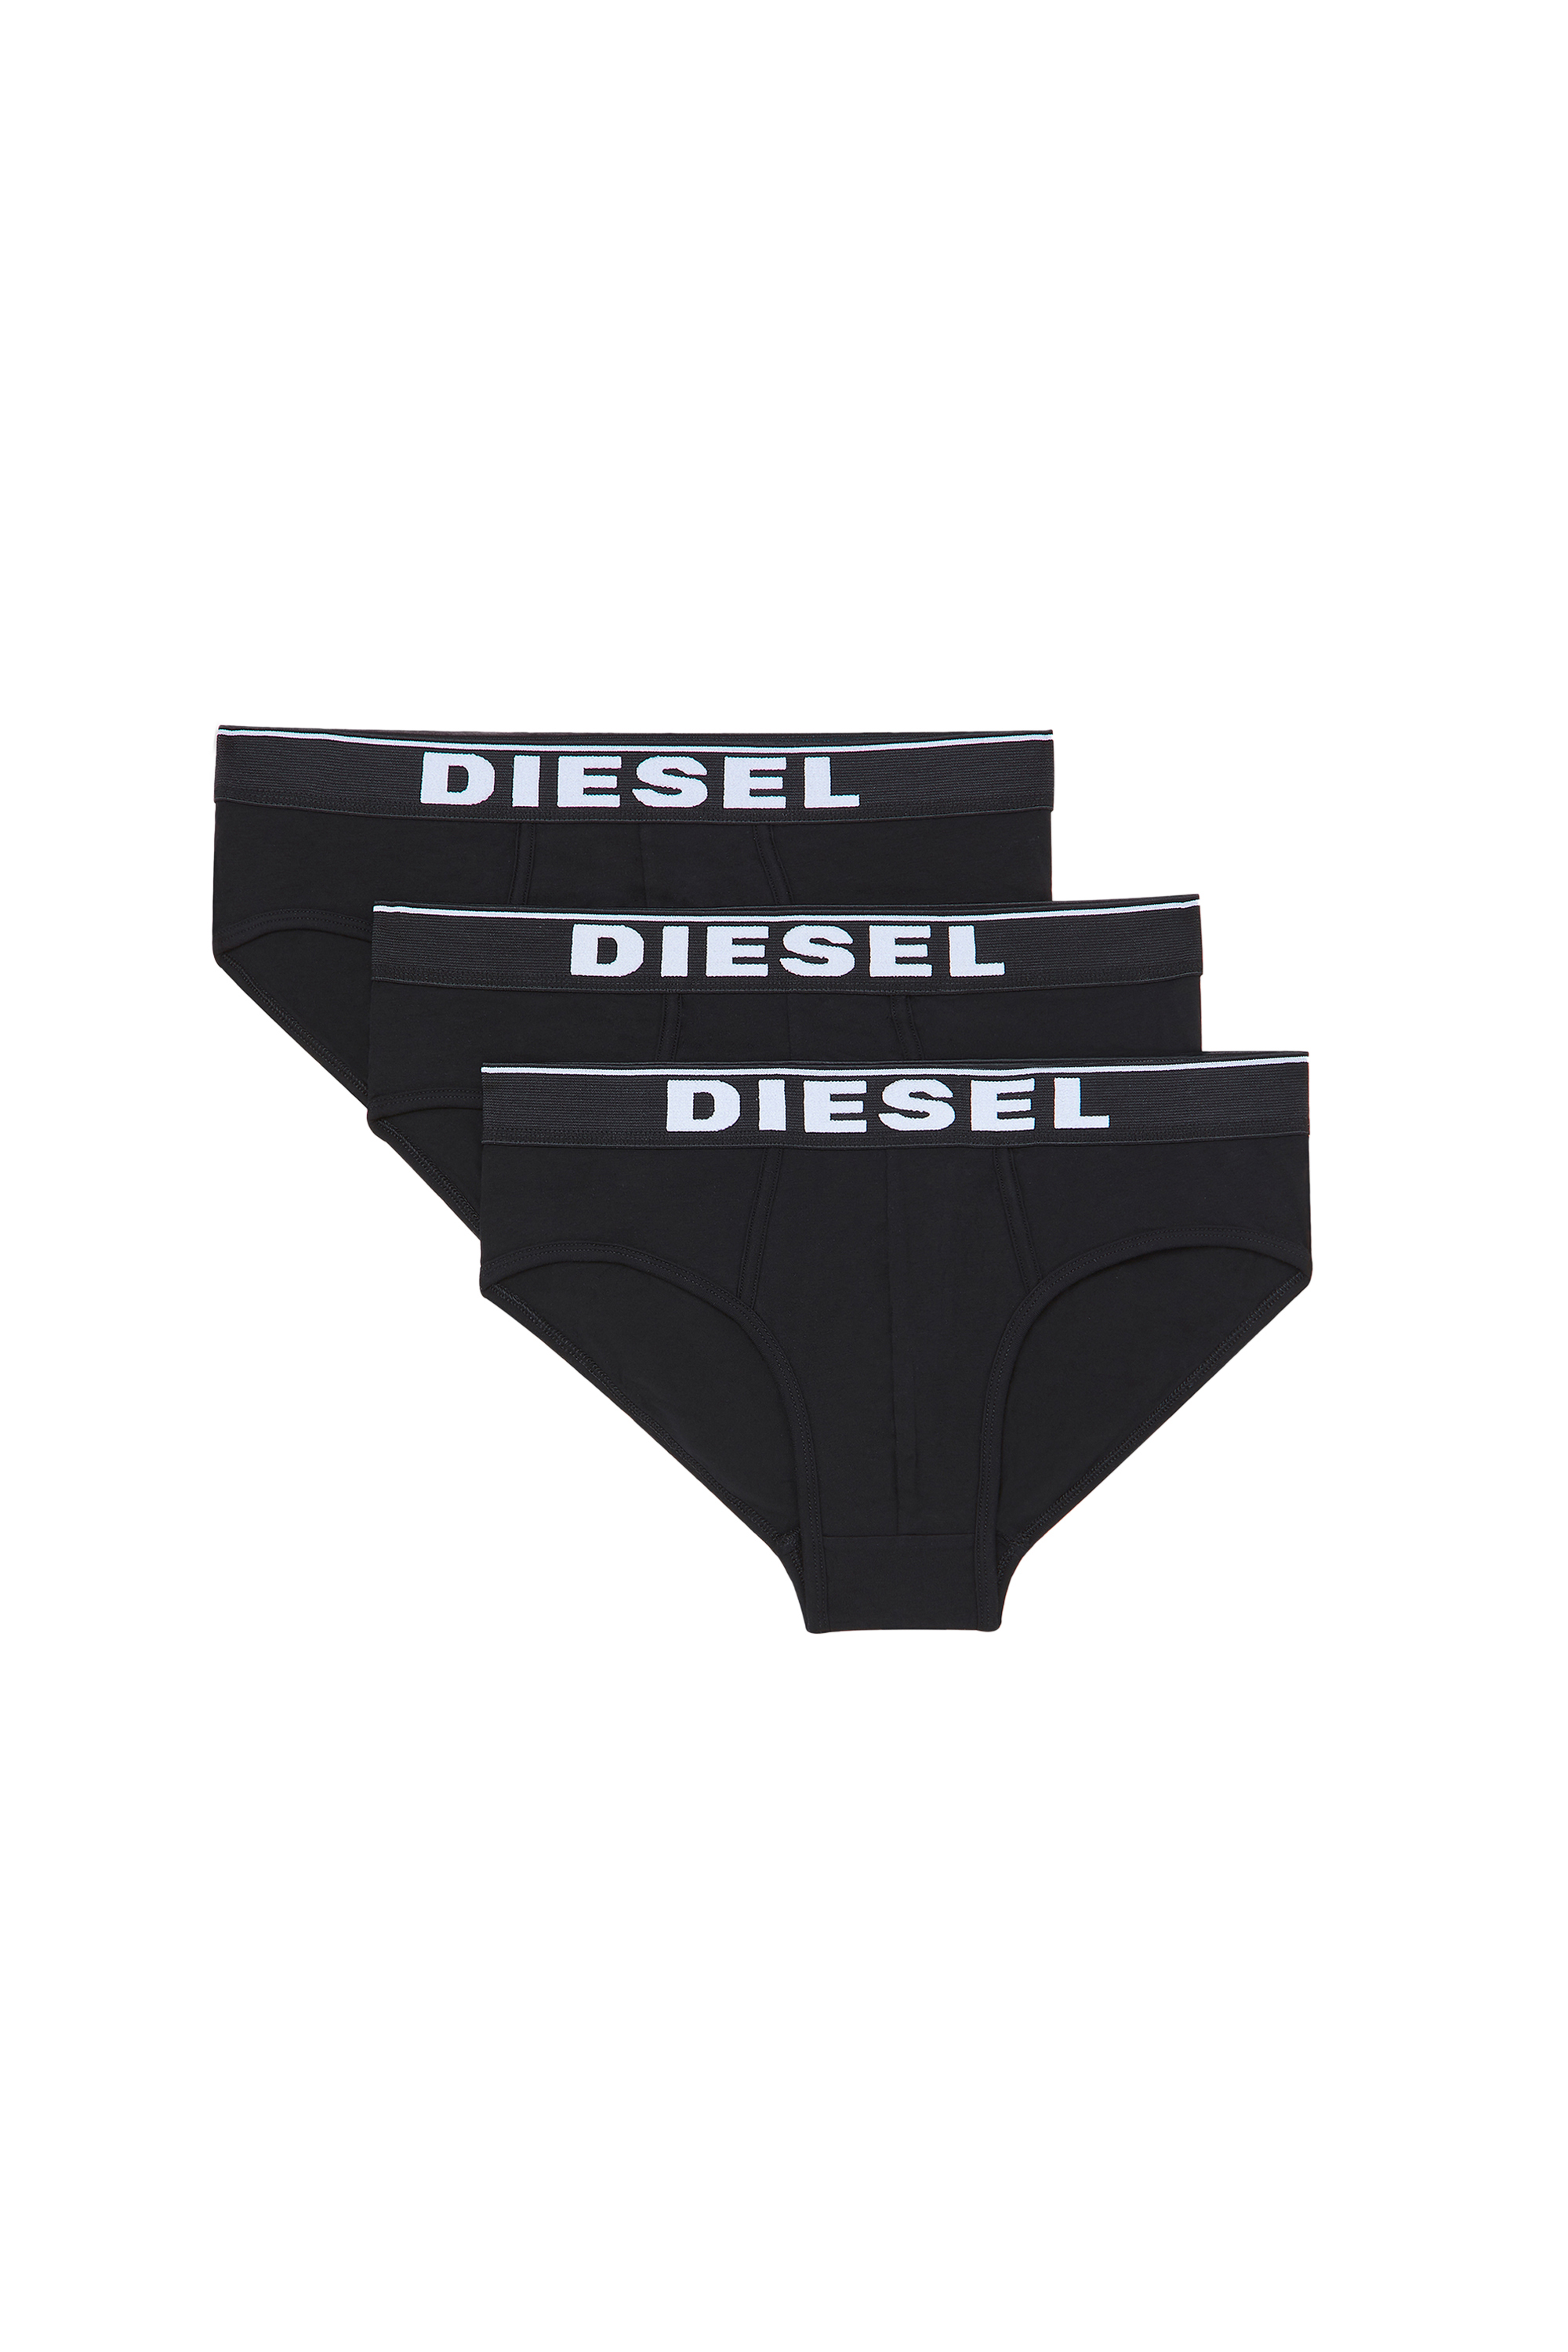 Diesel - UMBR-ANDRETHREEPACK, Black/White - Image 3